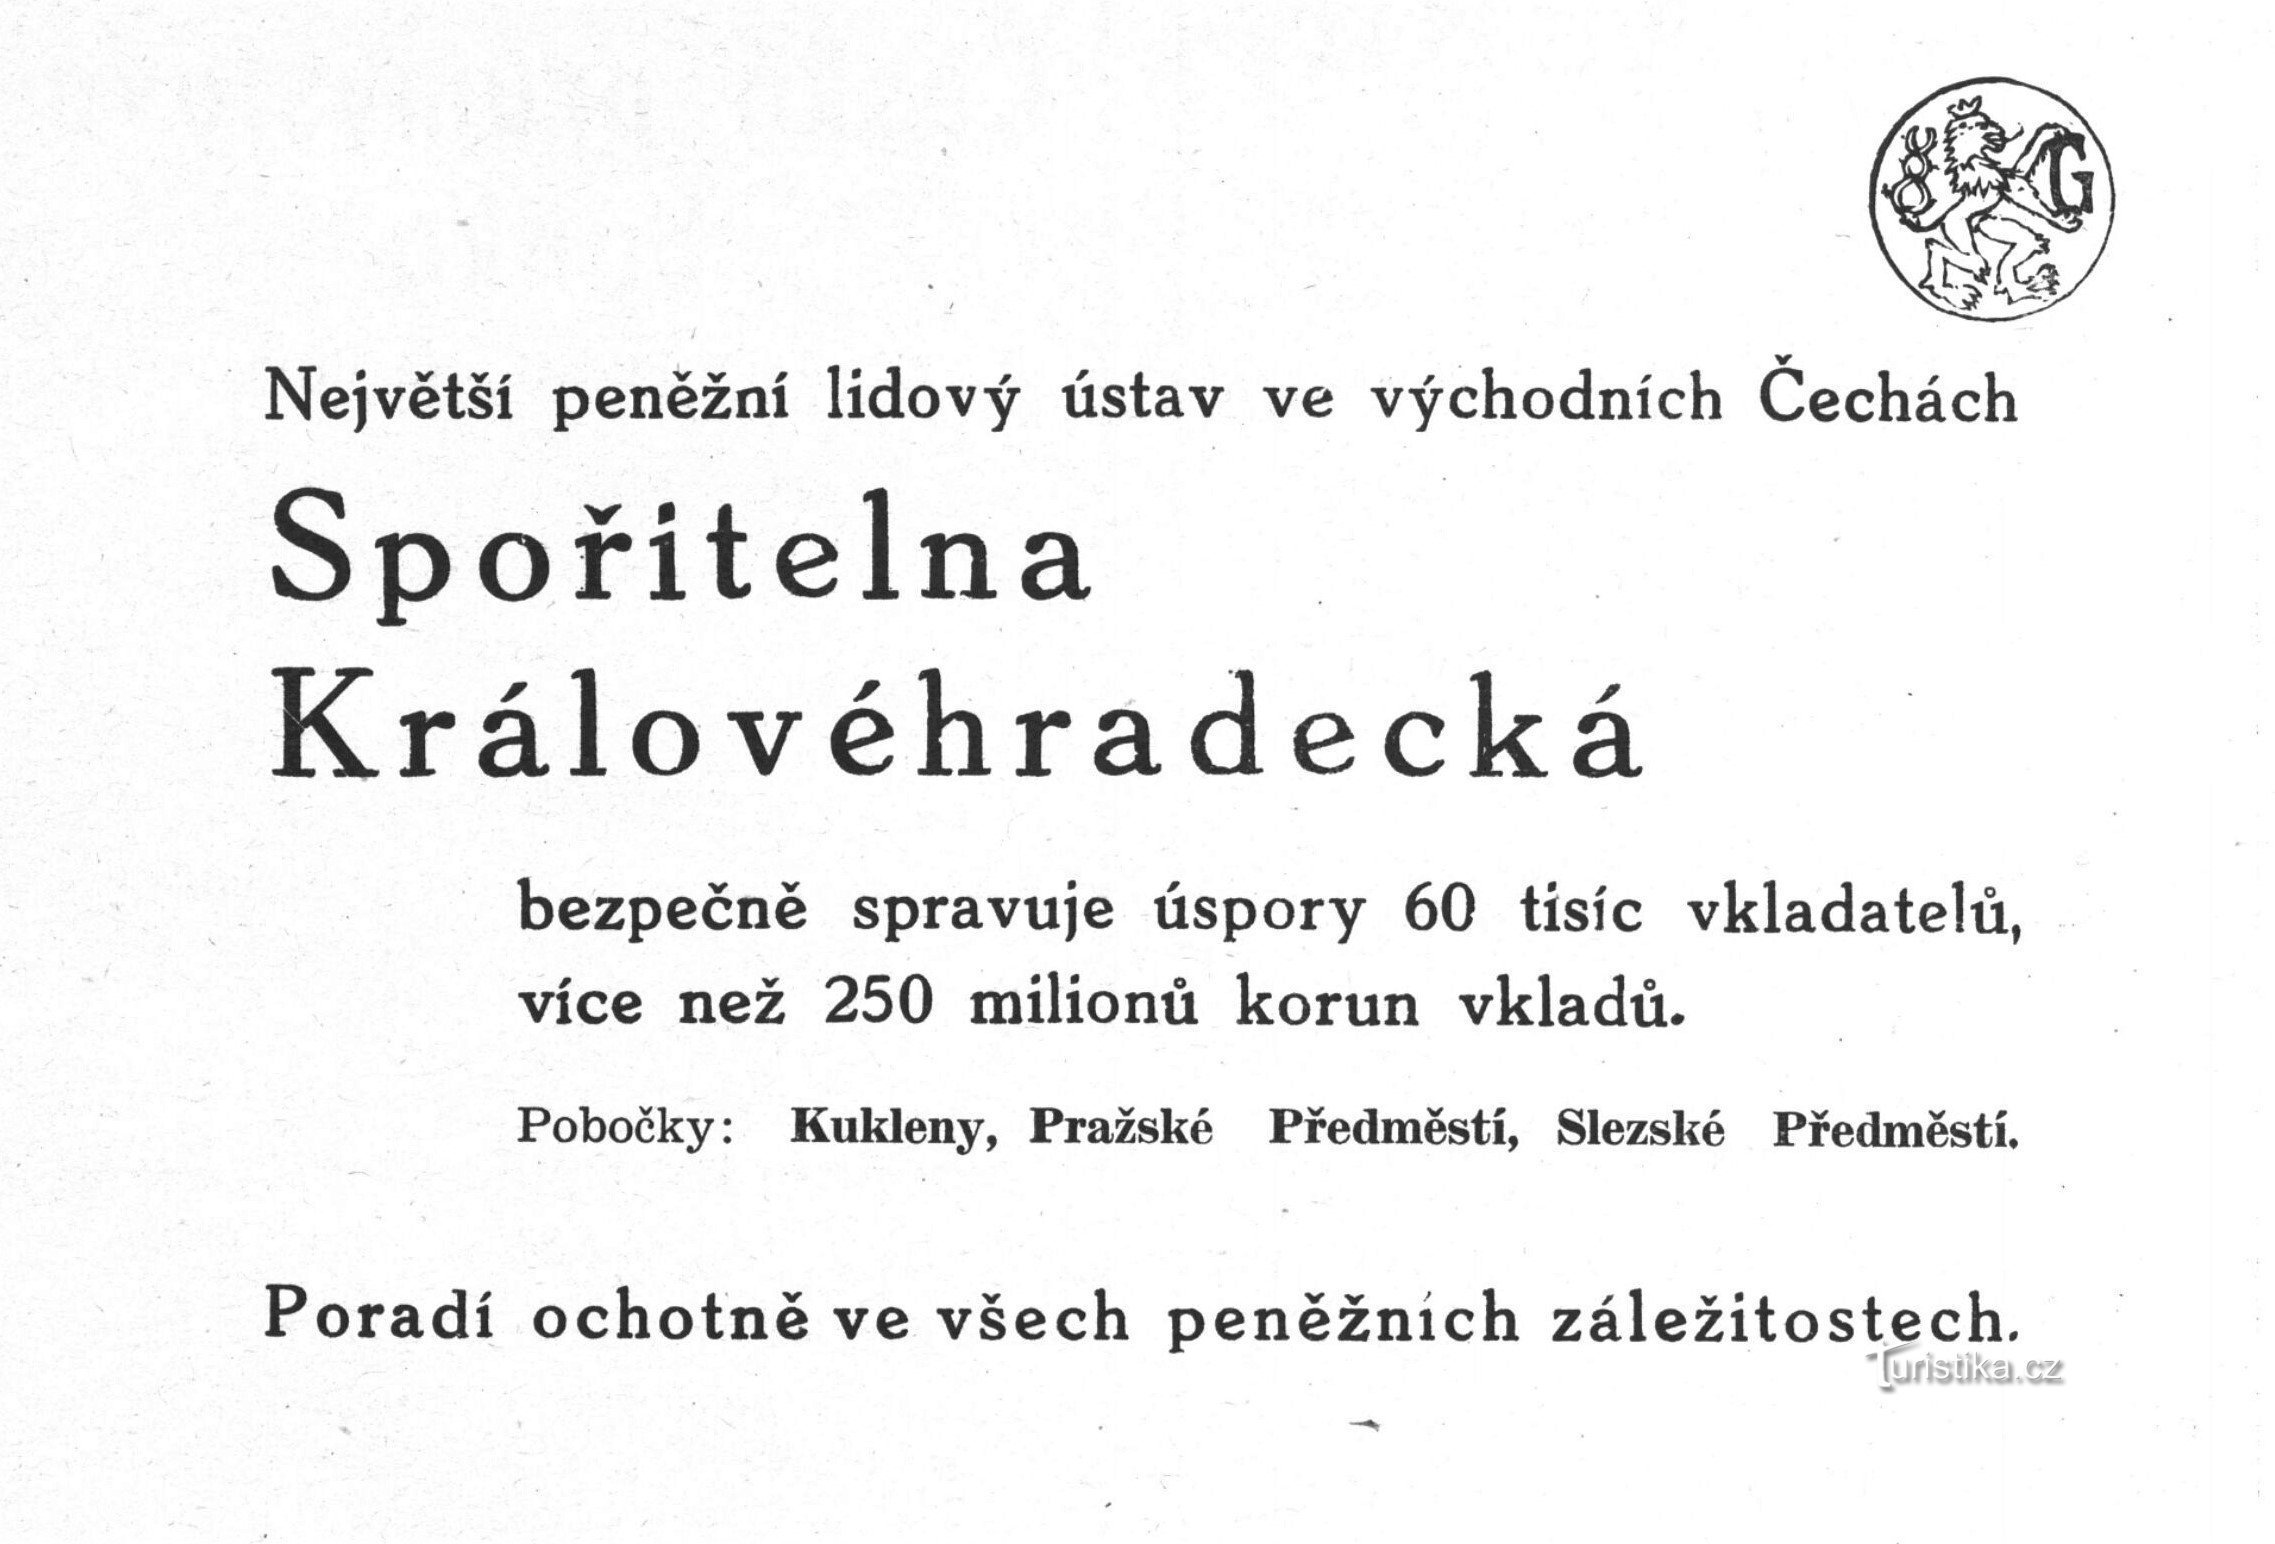 Annons för Spořitelna Královéhradecké från 1941